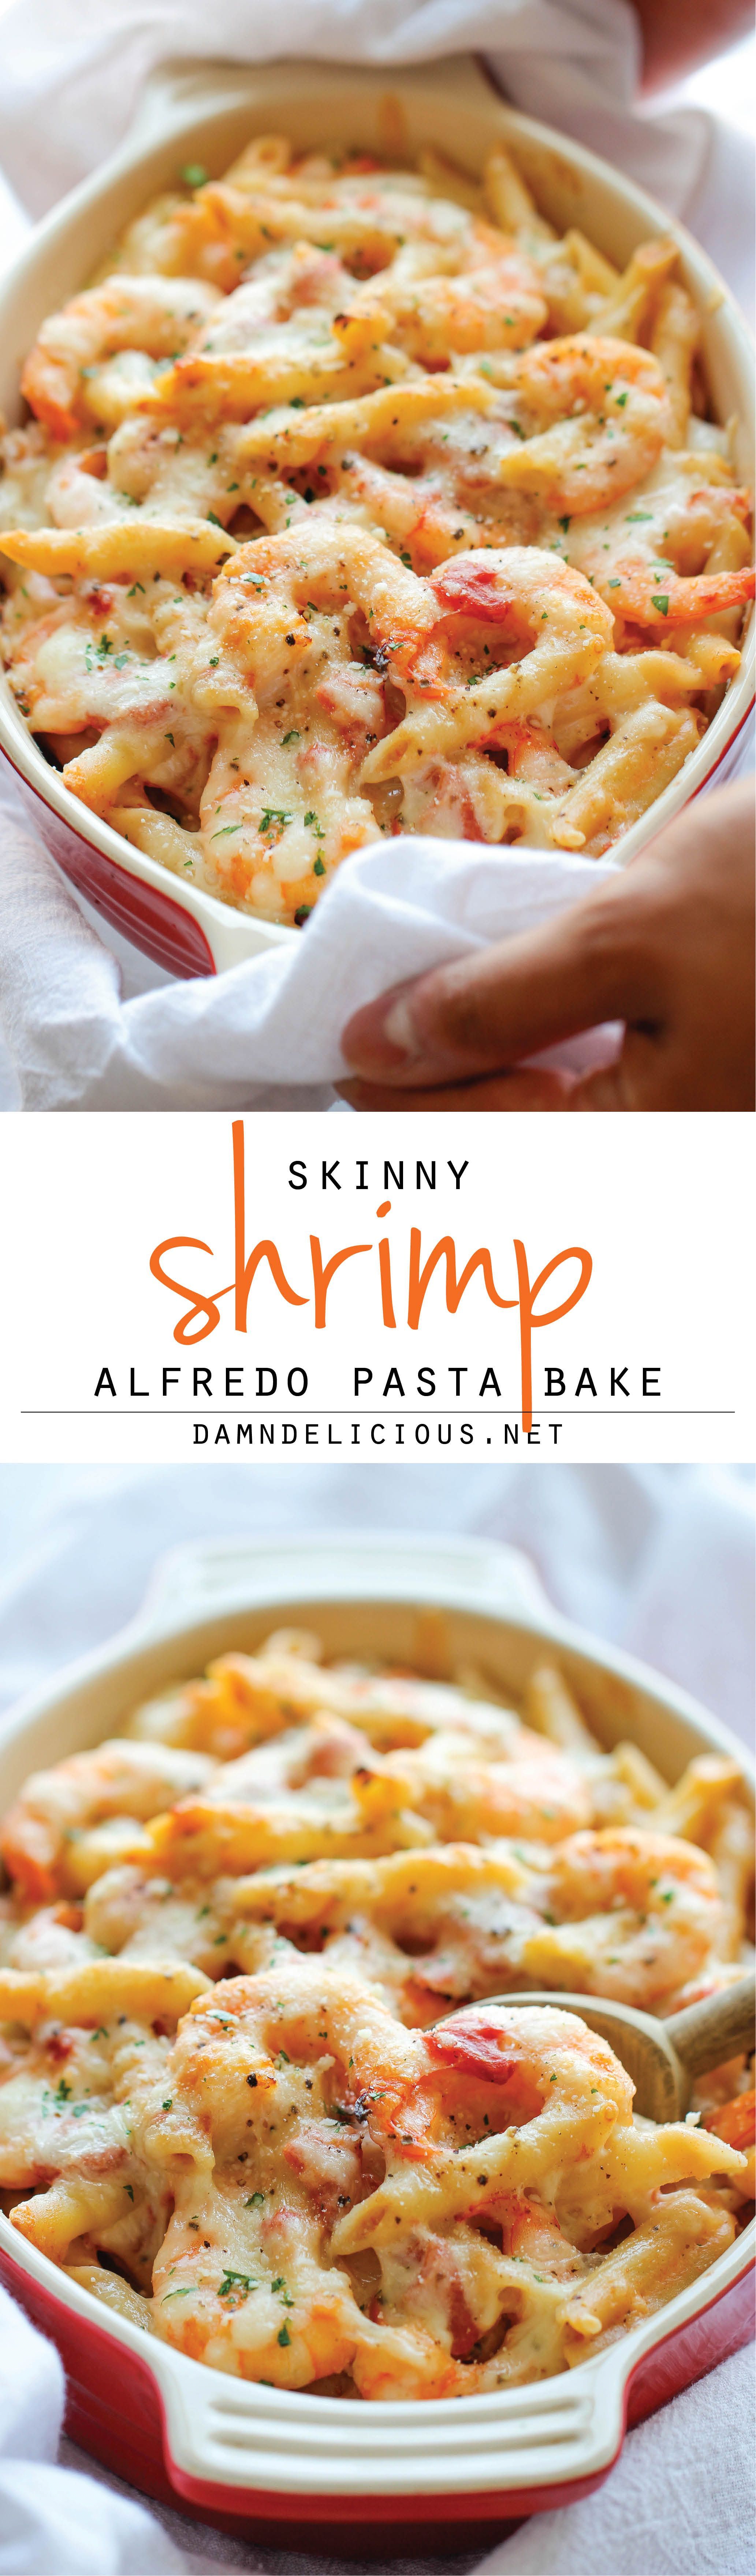 Skinny Shrimp Alfredo Pasta Bake // low carb it by subbing spaghetti squash #cas